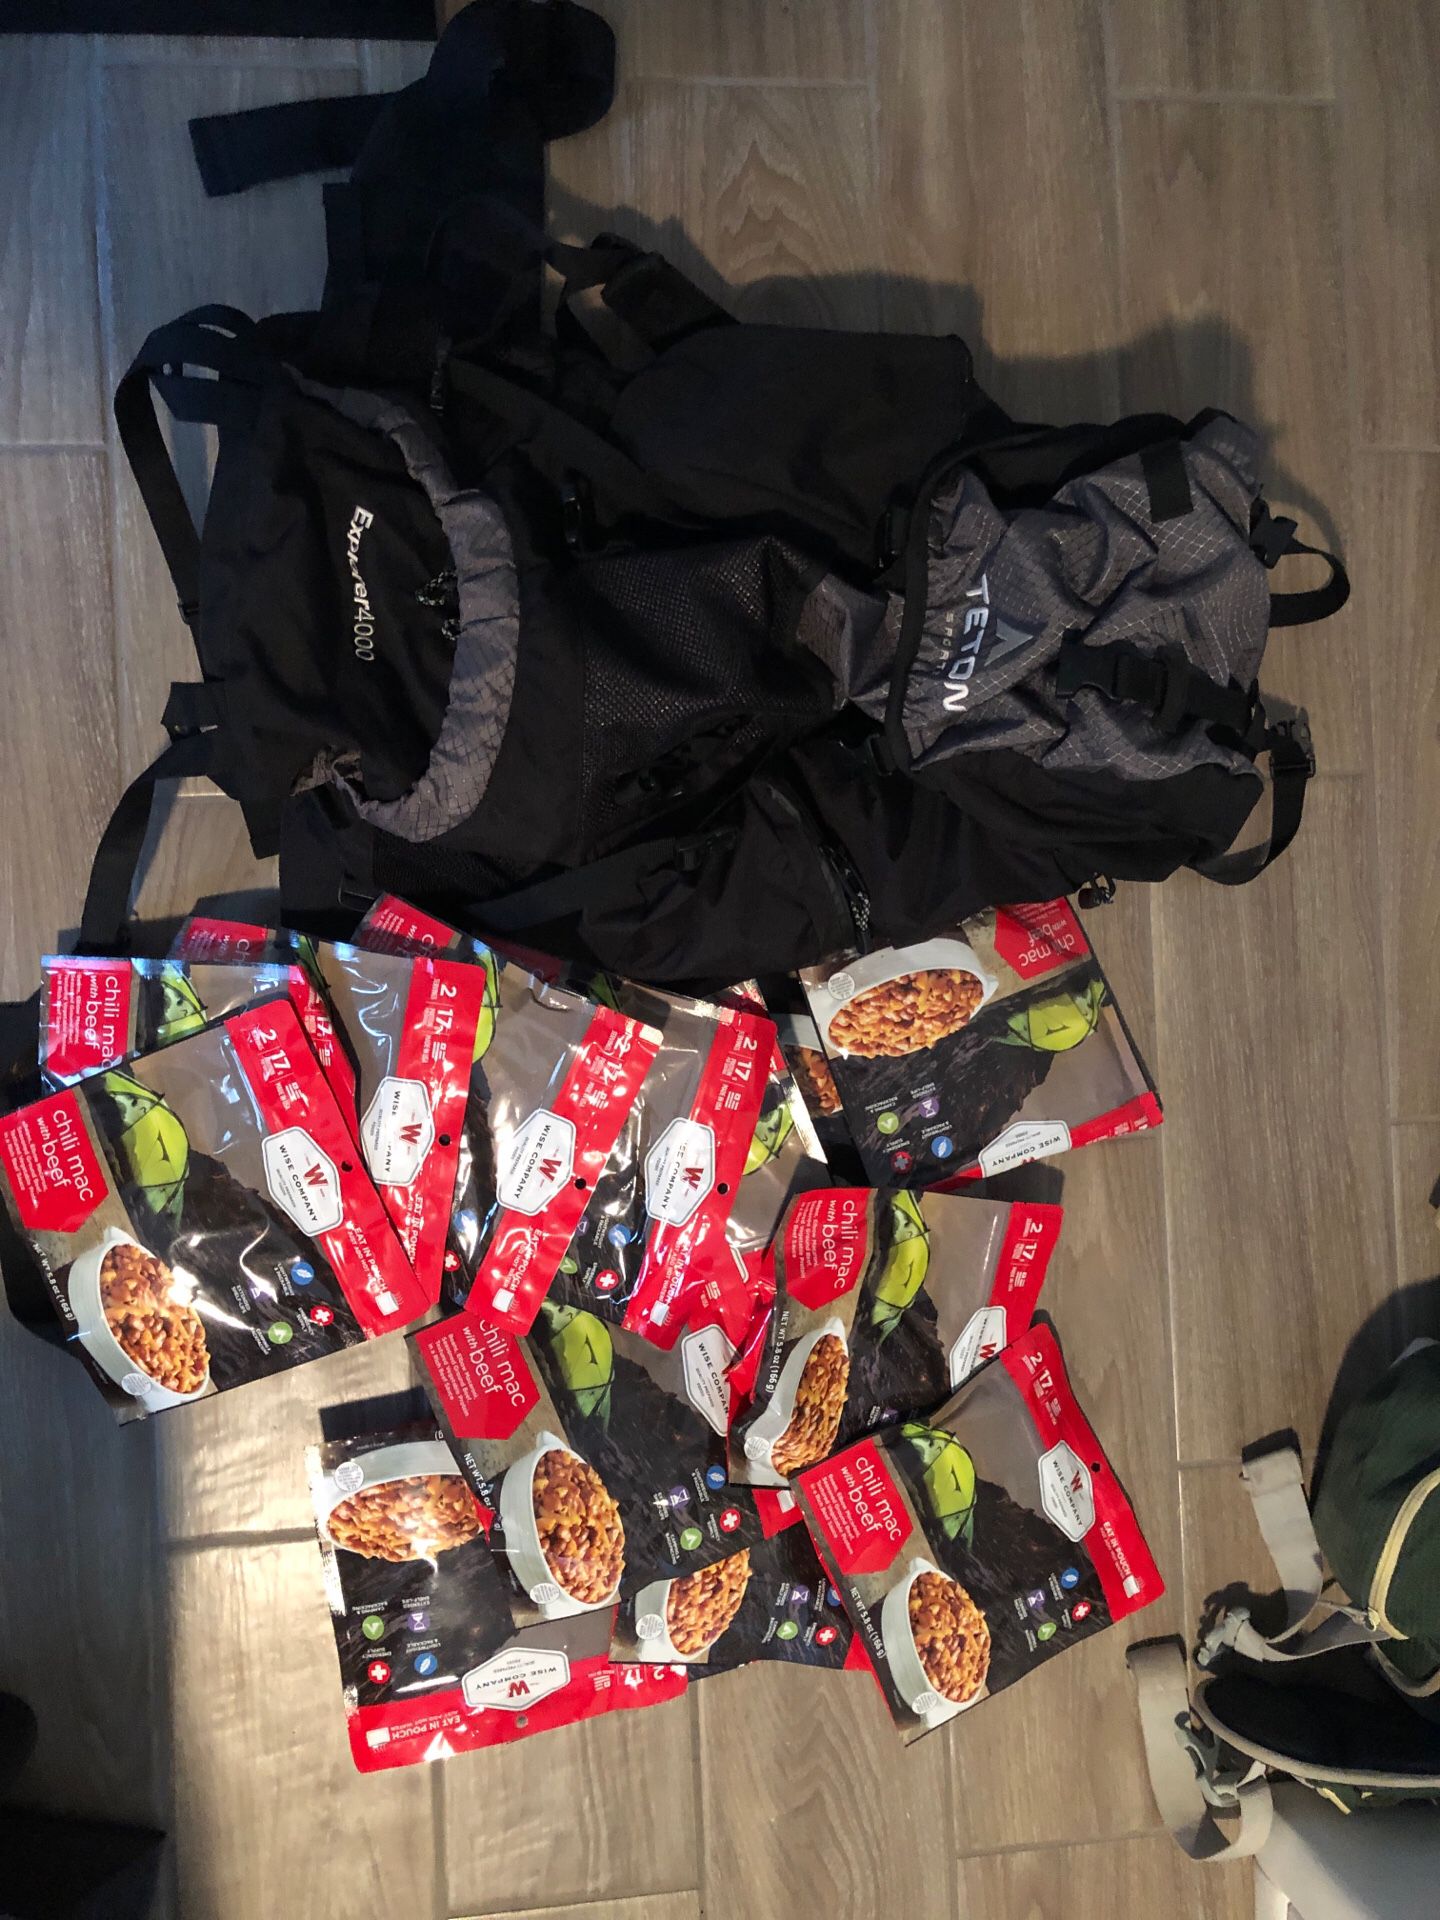 Teton Explorer 4000 hiking backpack 65 Liters plus 10+packs of freeze dried food